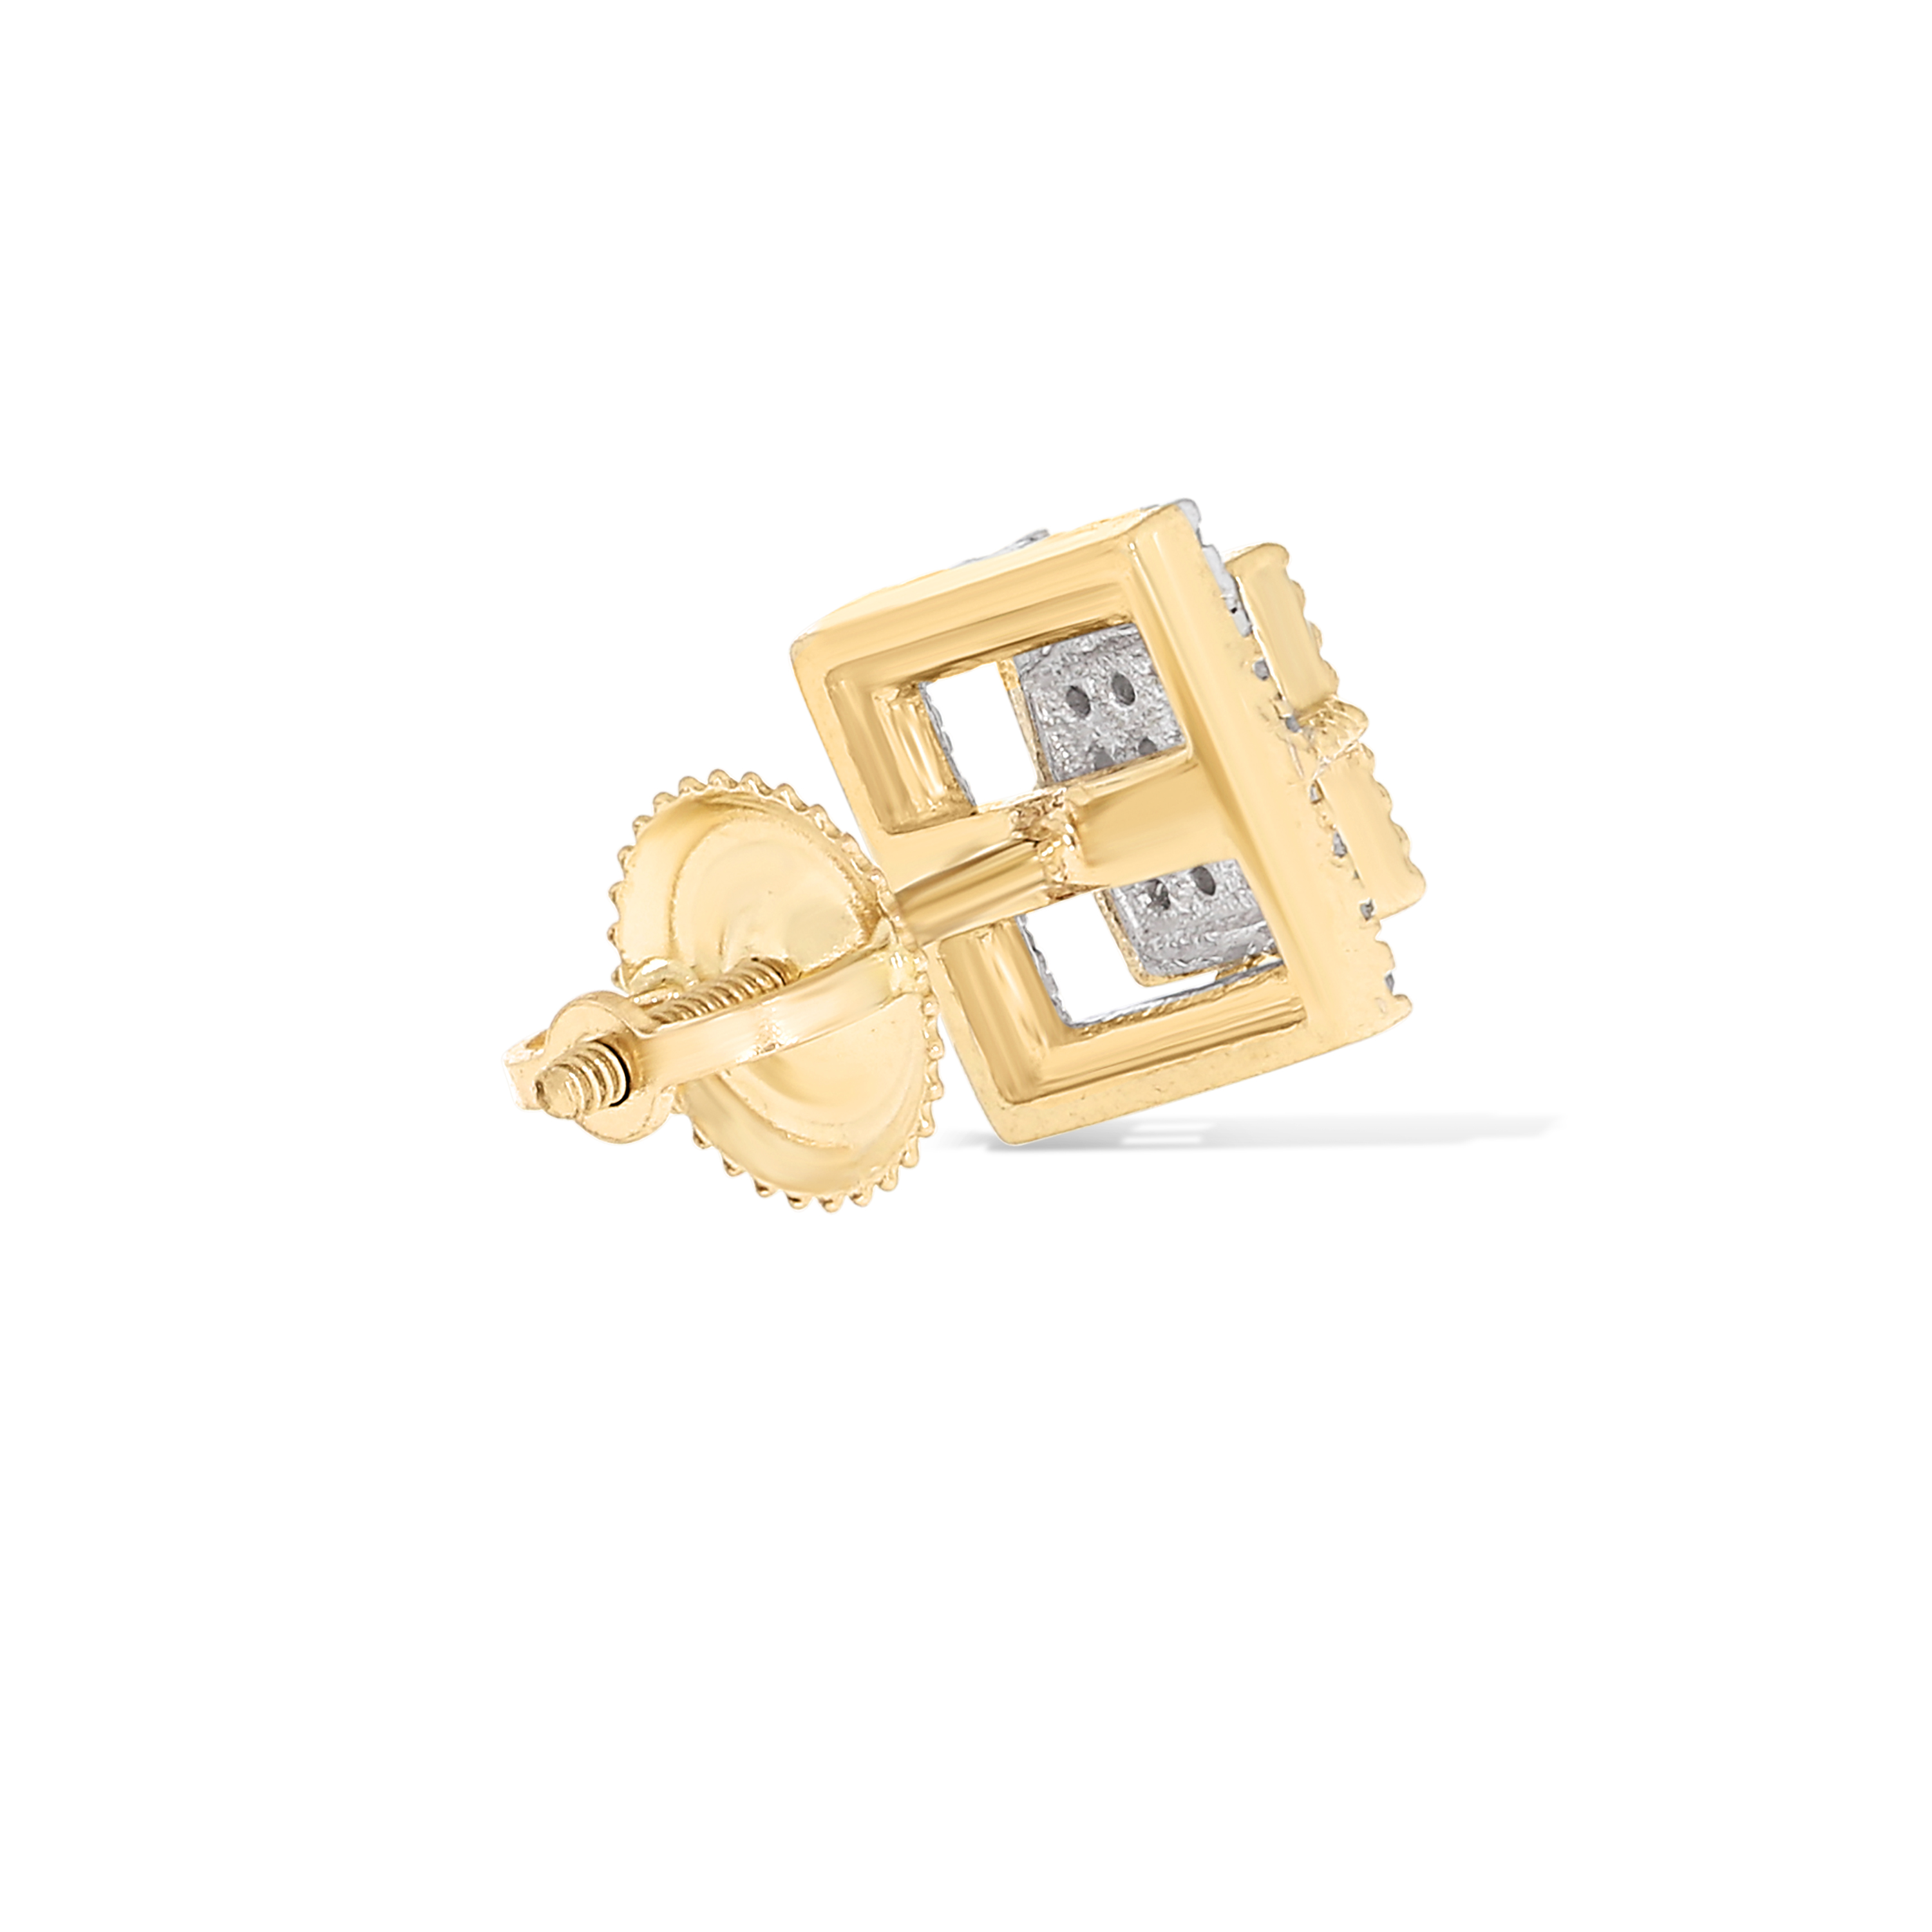 Square Design Diamond Earrings 0.18 ct. 10k Yellow Gold